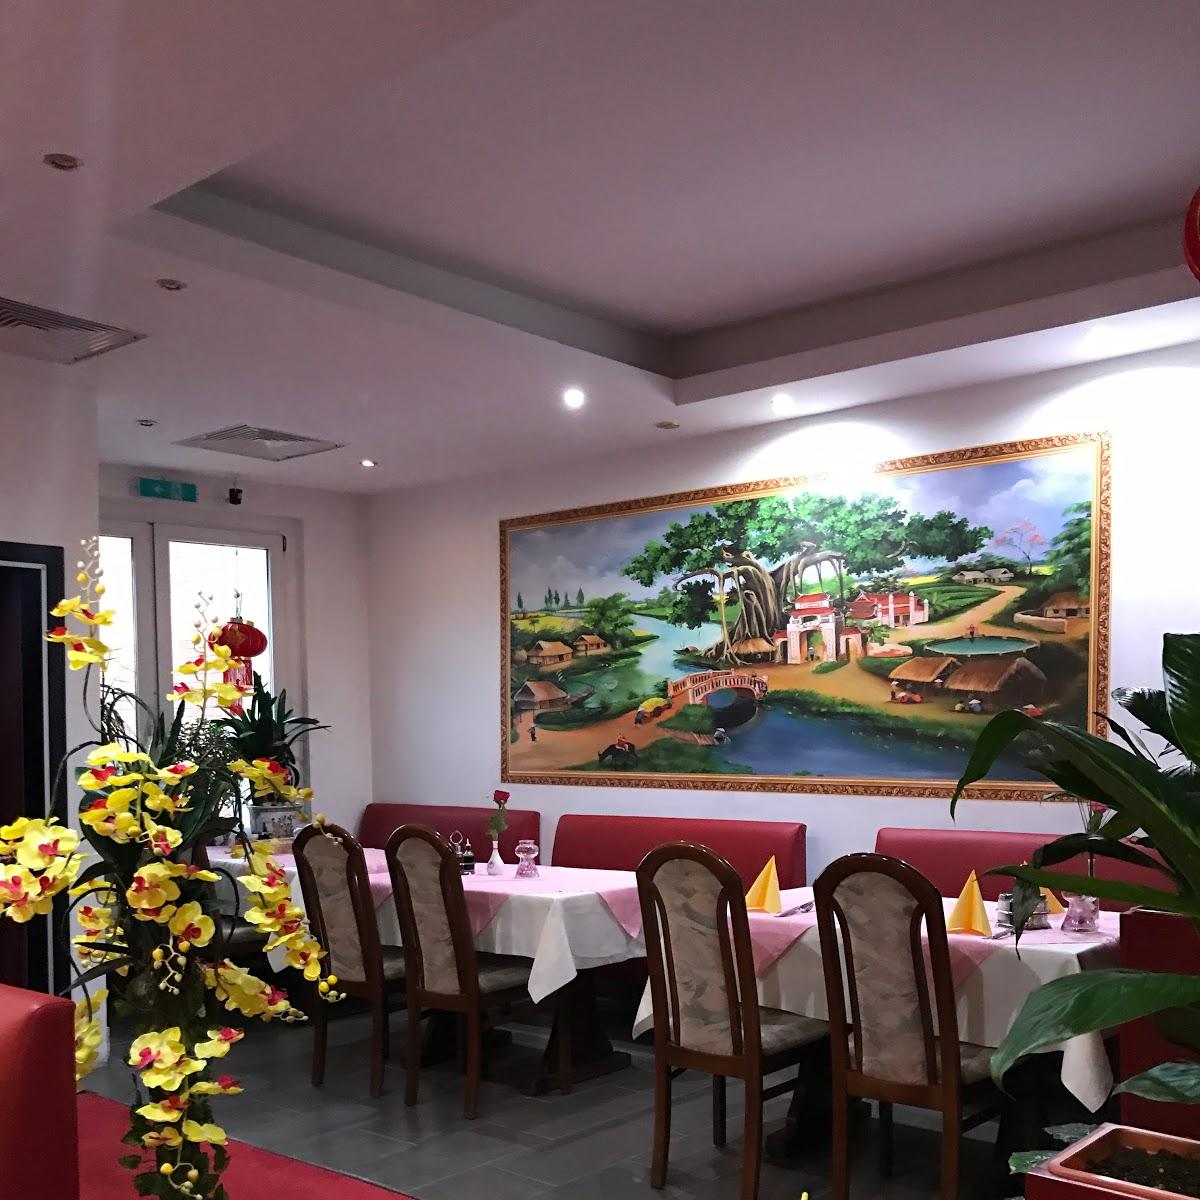 Restaurant "The Original China Town" in  Coburg